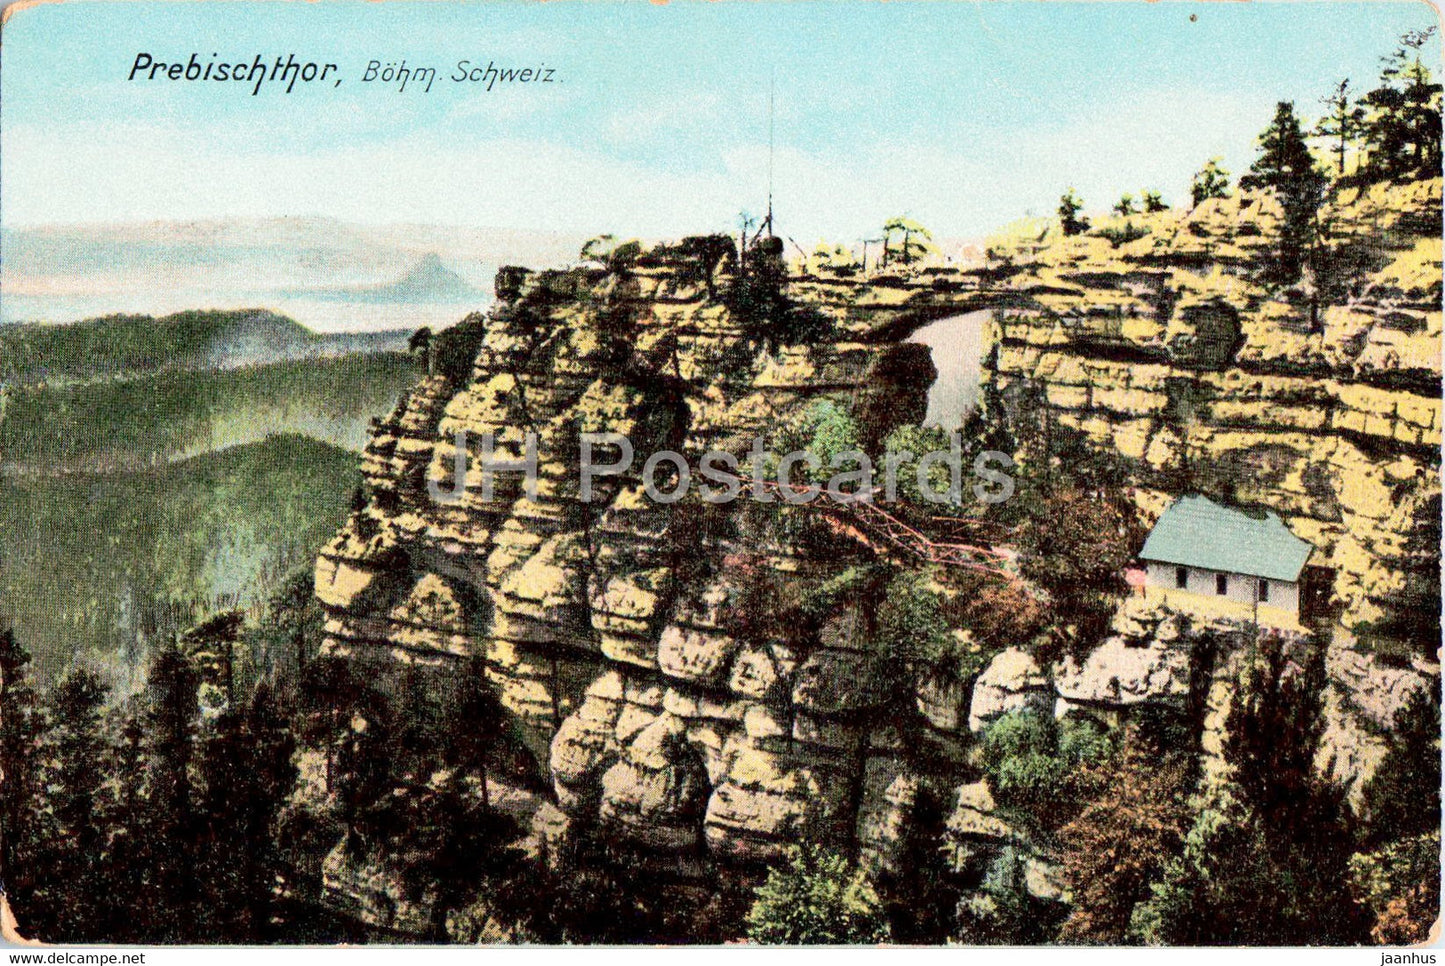 Prebischtor - Bohm Schweiz - old postcard - Czech Republic - unused - JH Postcards